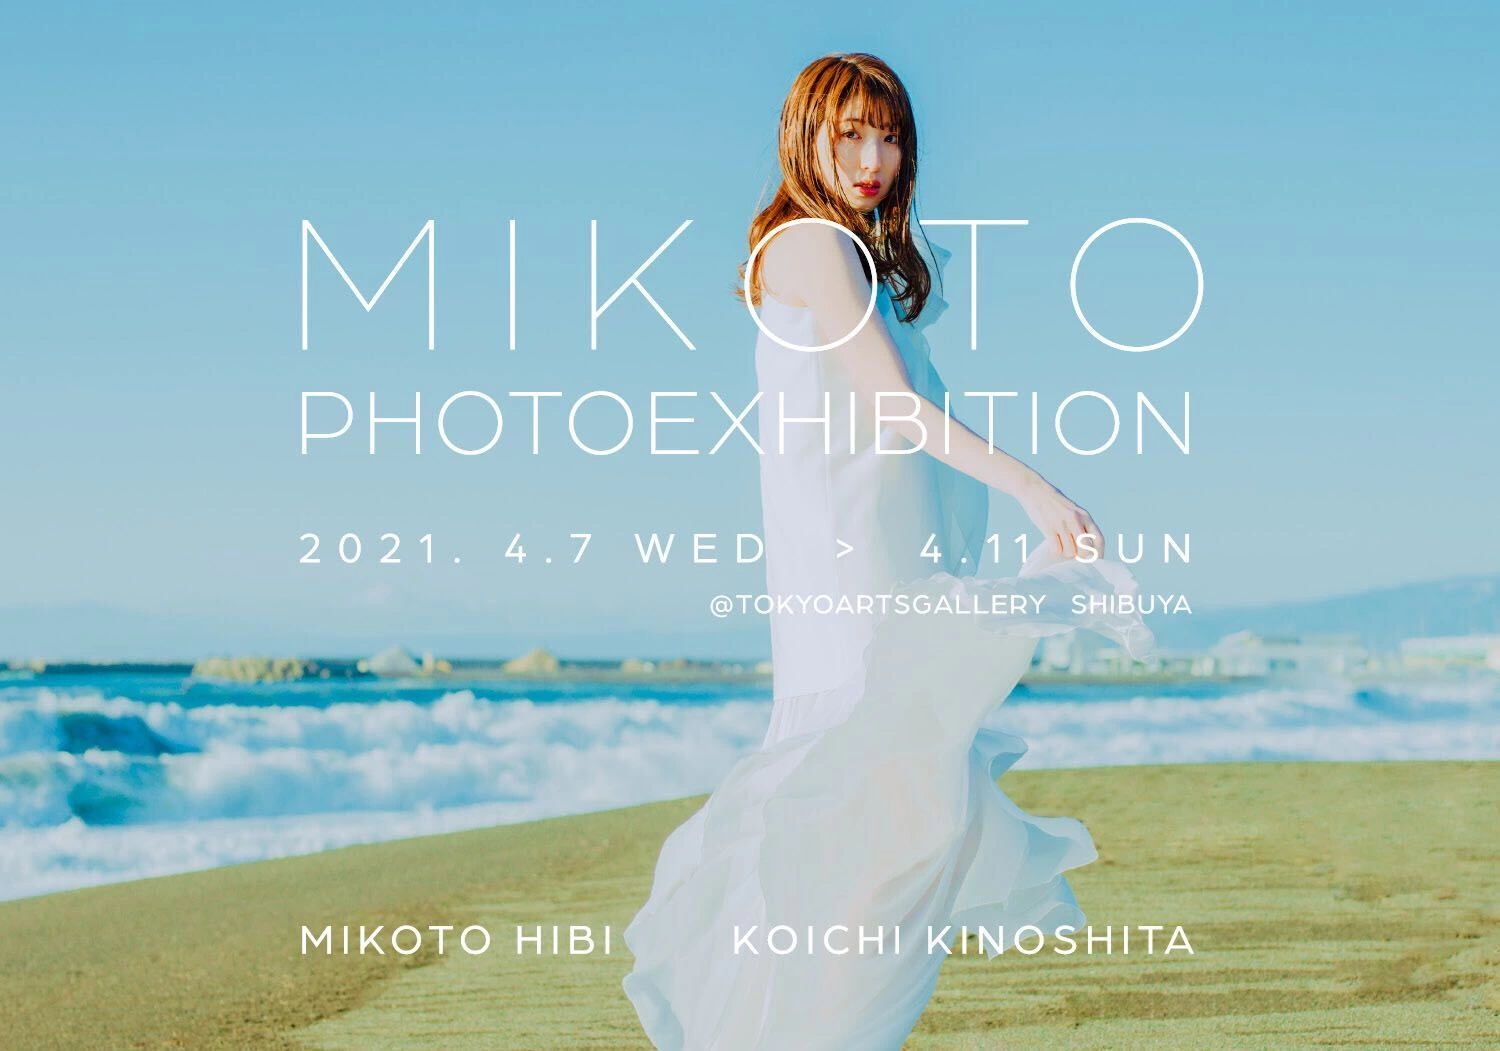 写真展『MIKOTO PHOTOEXHIBITION』